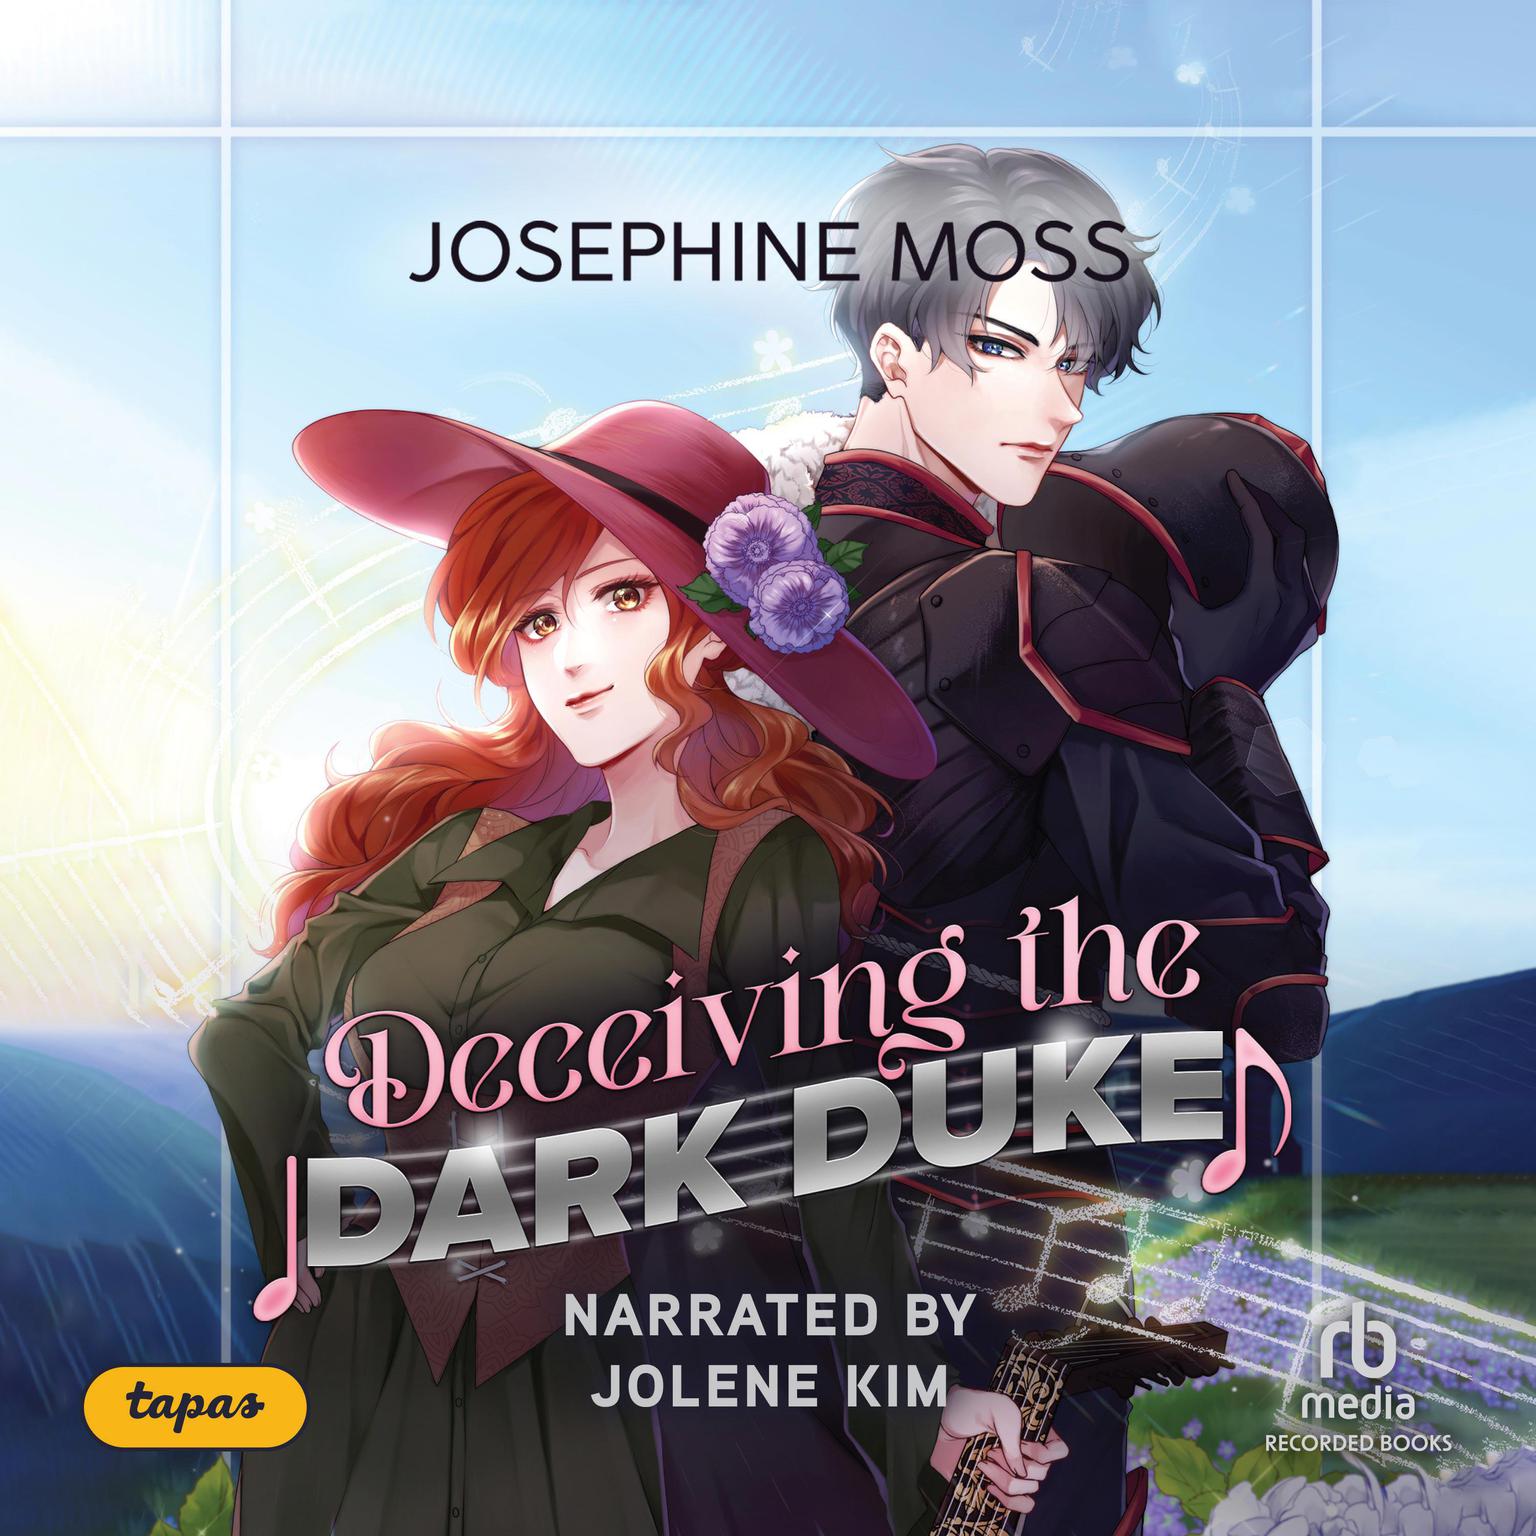 Deceiving the Dark Duke Audiobook, by Josephine Moss